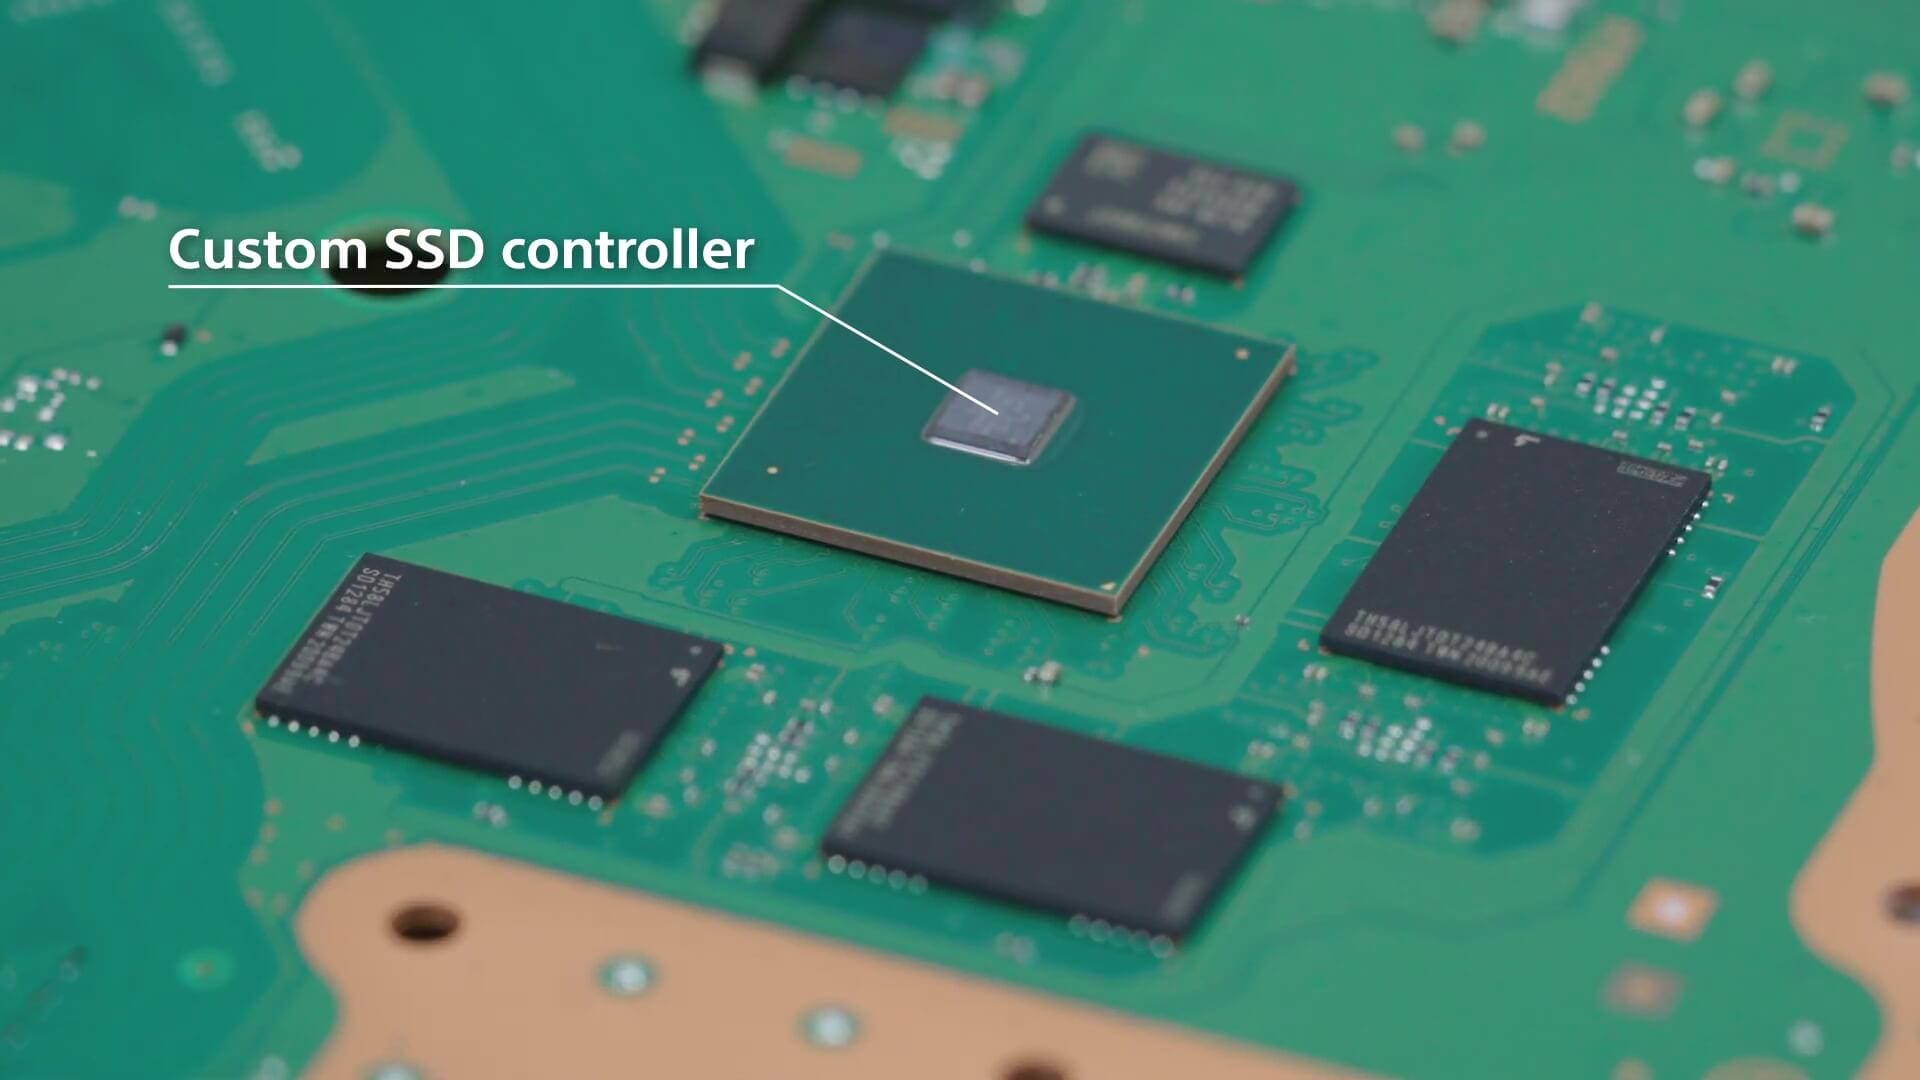 PS5 teardown - Internal Custom SSD Controller